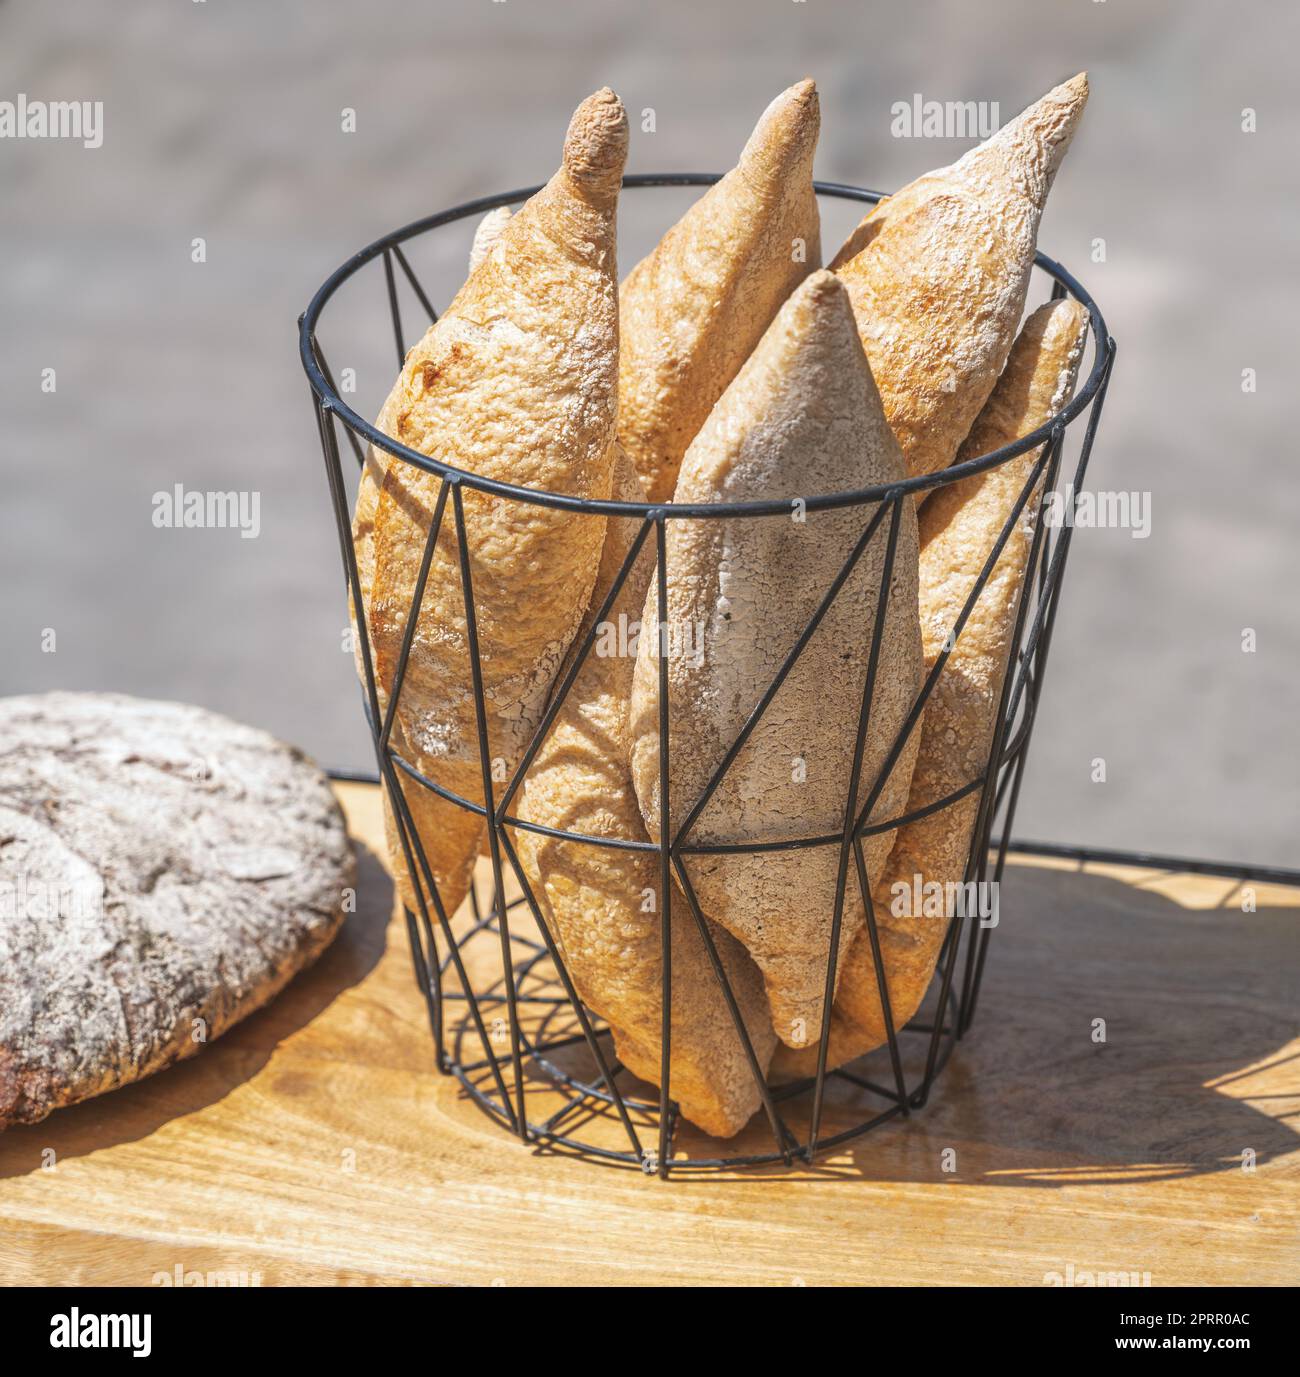 Brotkorb mit knusprigem Weißbrot Stockfoto